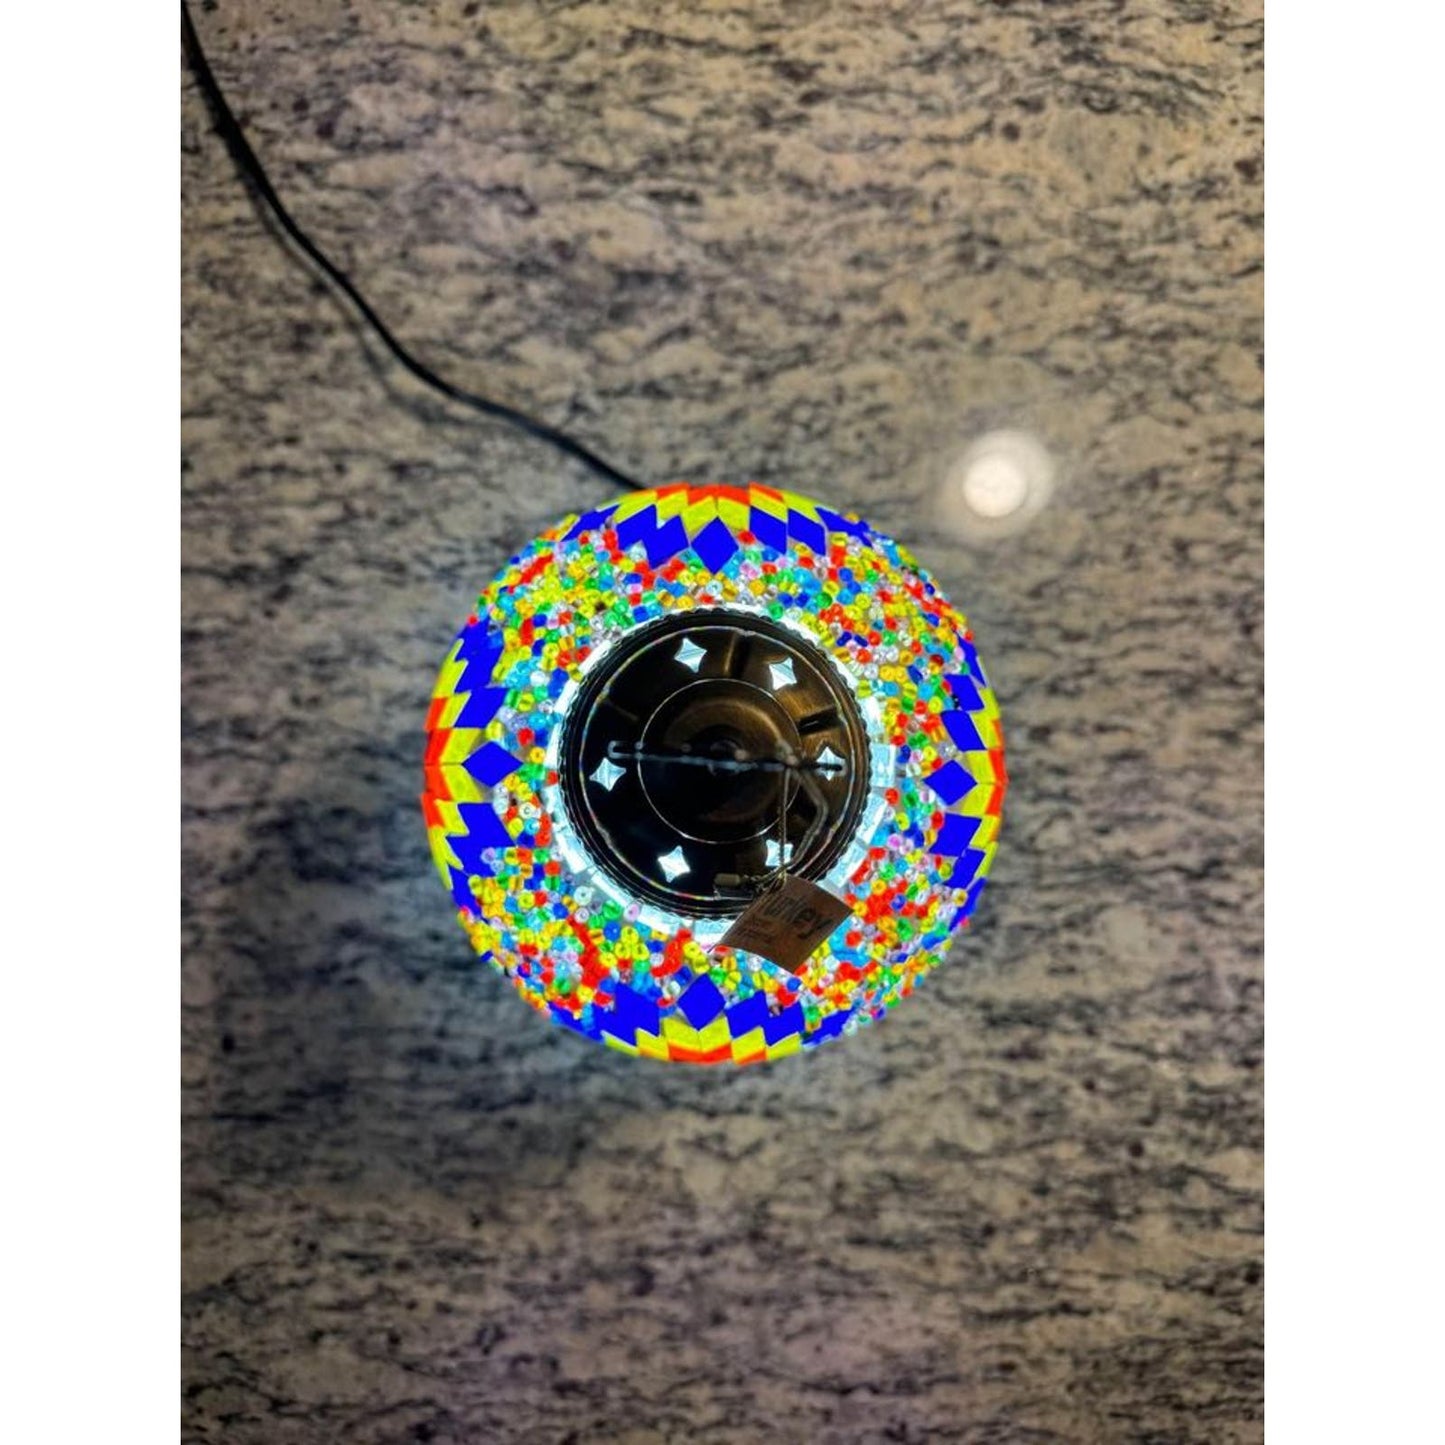 Handmade mosaic lamp, colorful geometric design